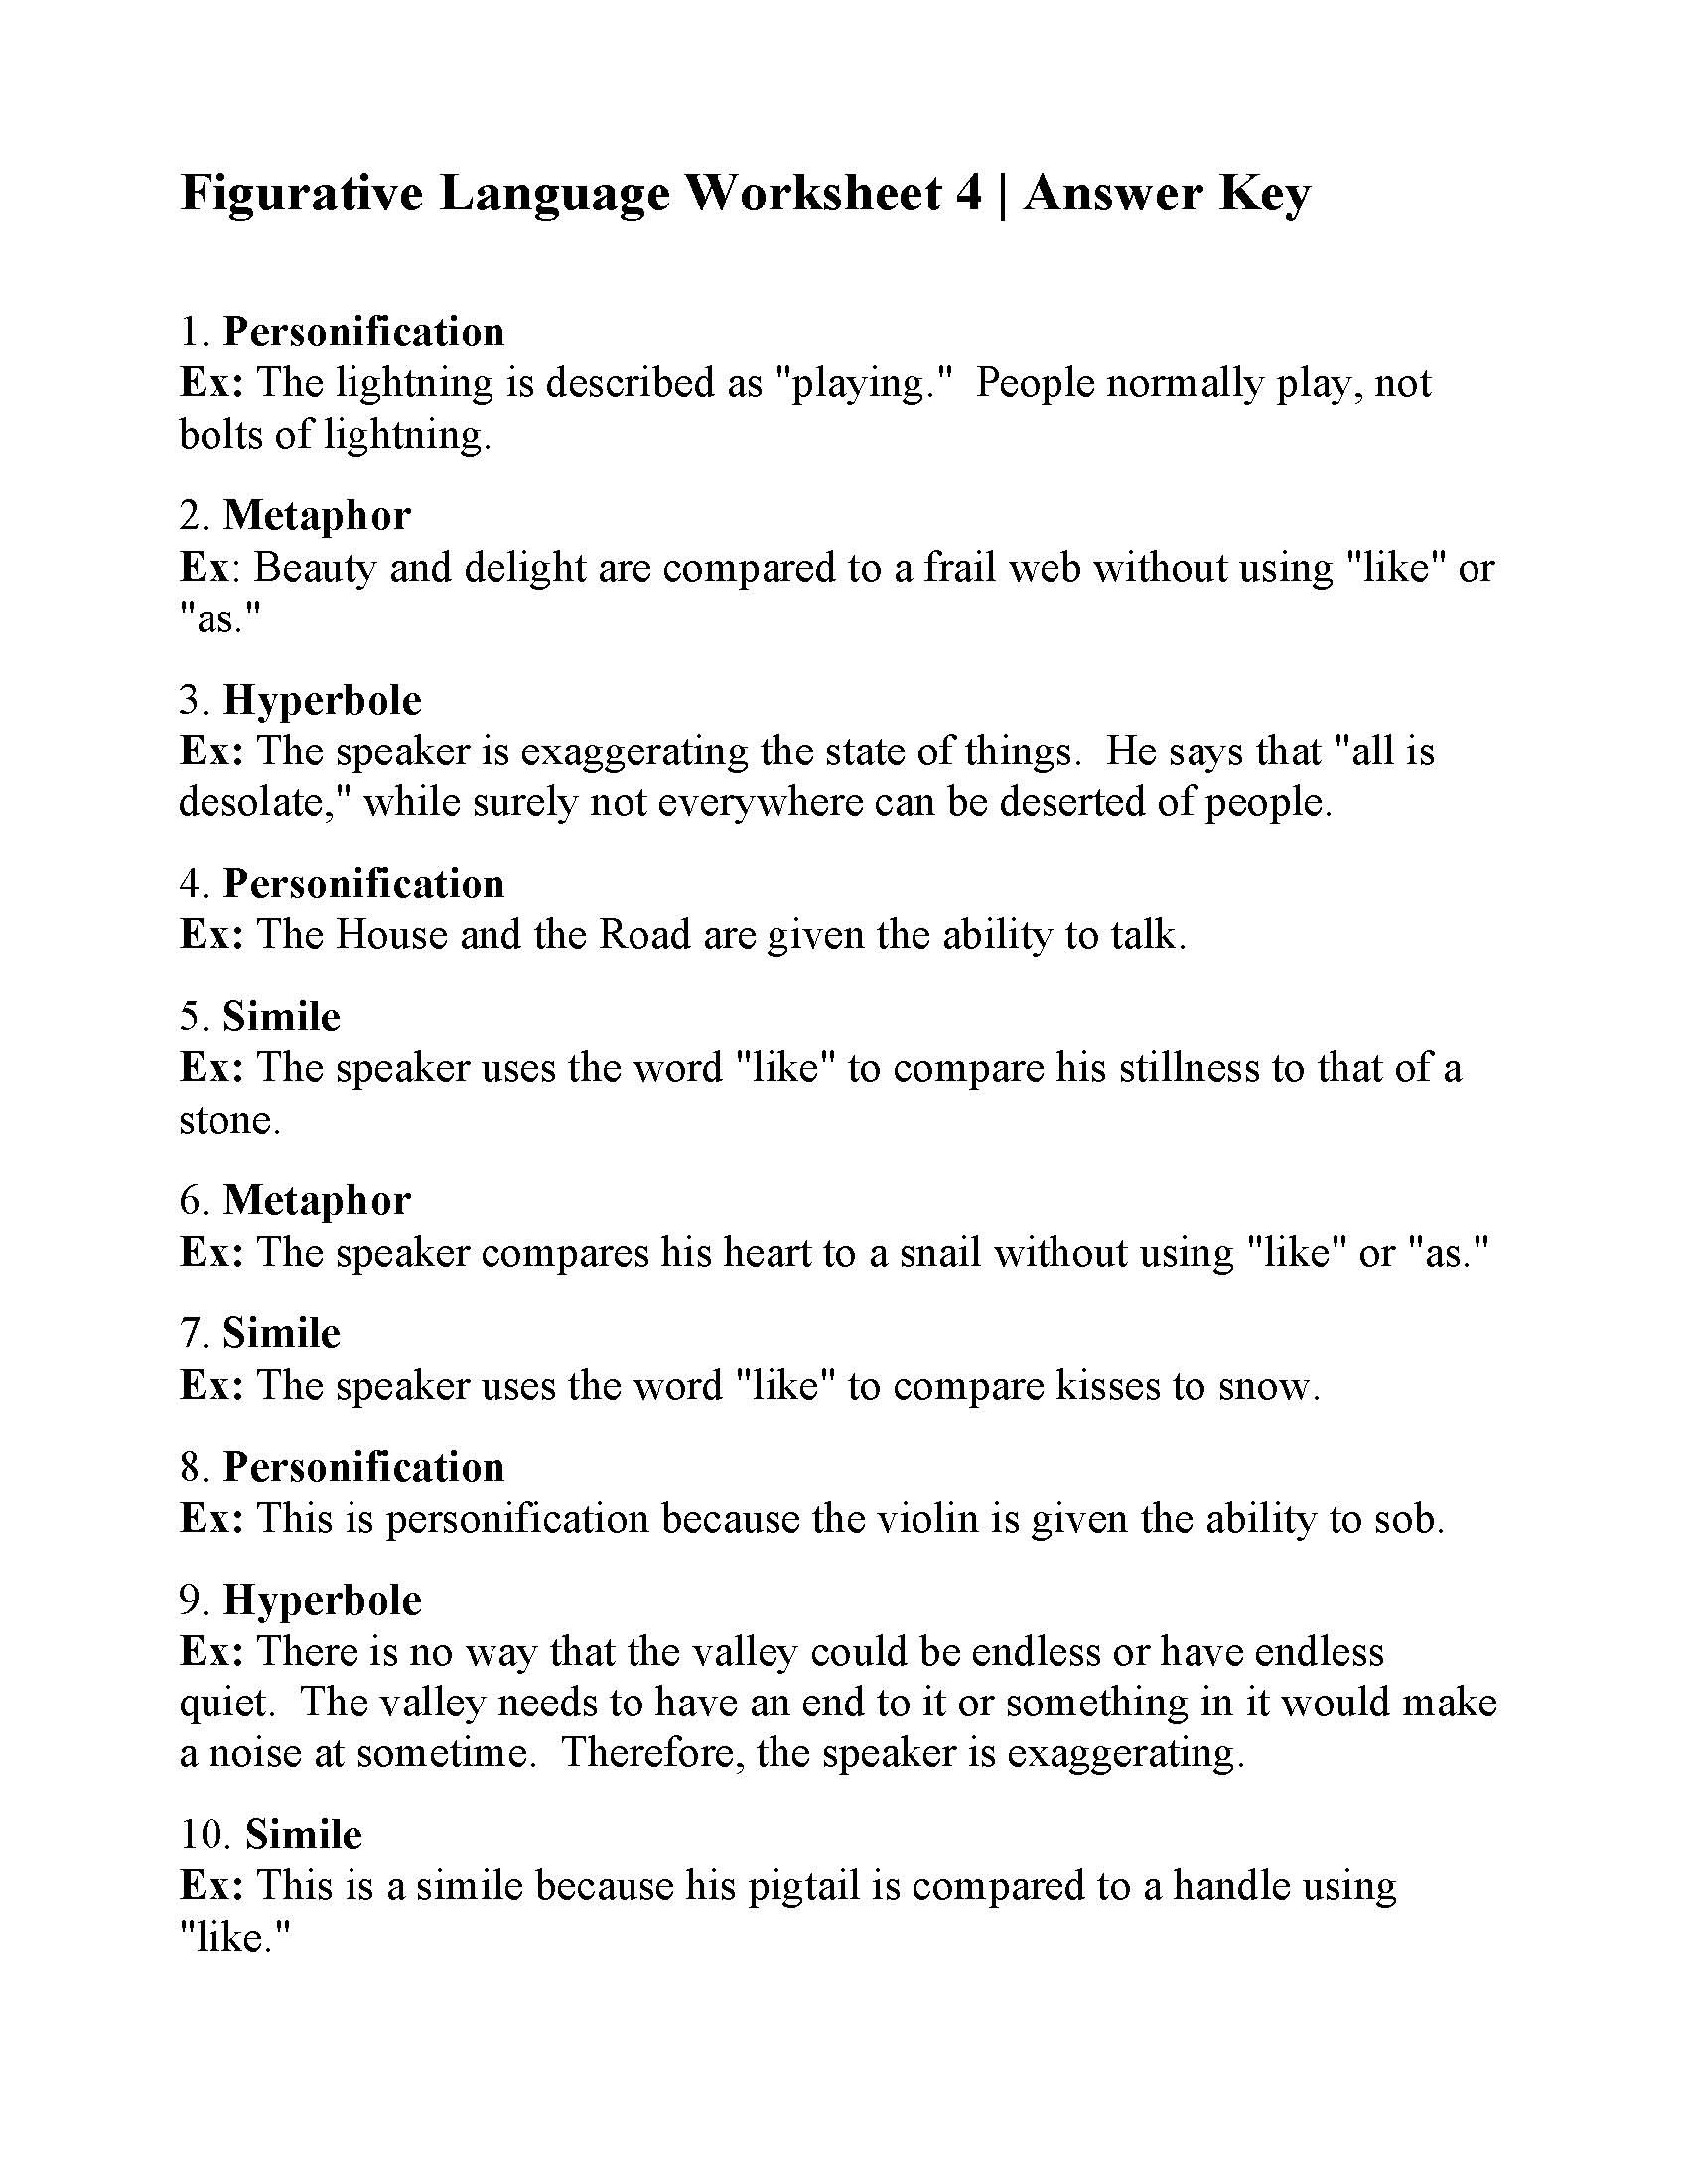 Figurative Language Worksheet 1 Db excel